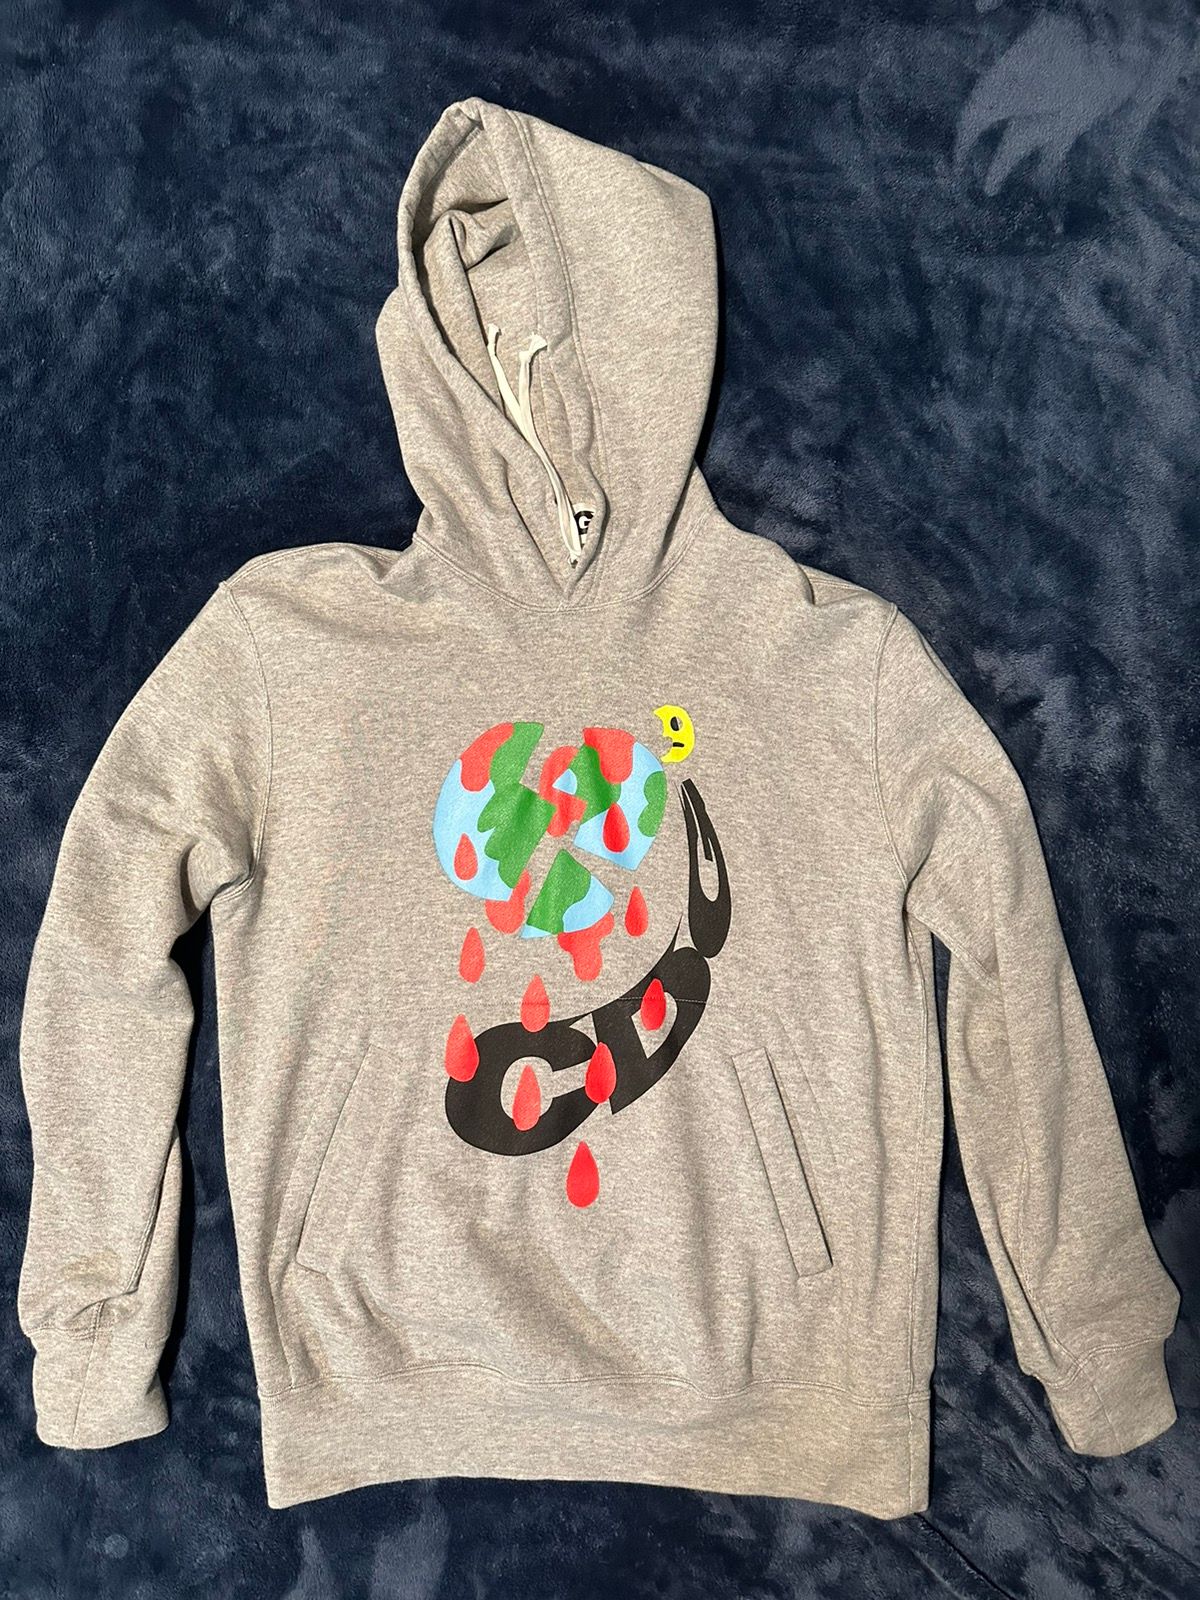 CDG CDG CDG CDG x Better Gift Shop Hooded Sweatshirt | Grailed